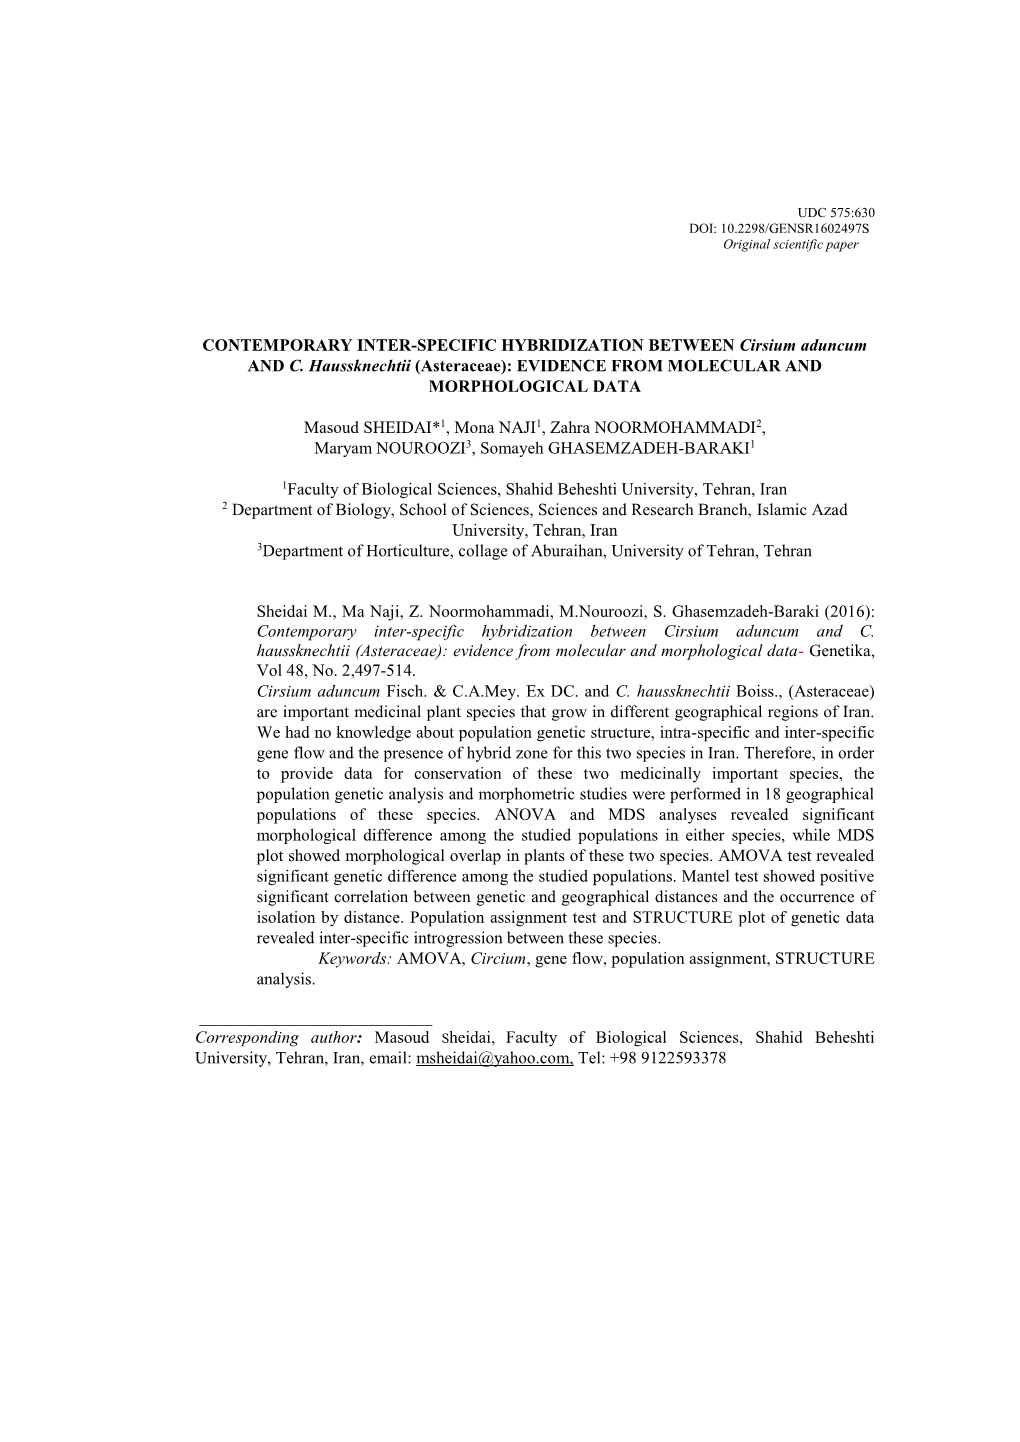 CONTEMPORARY INTER-SPECIFIC HYBRIDIZATION BETWEEN Cirsium Aduncum and C